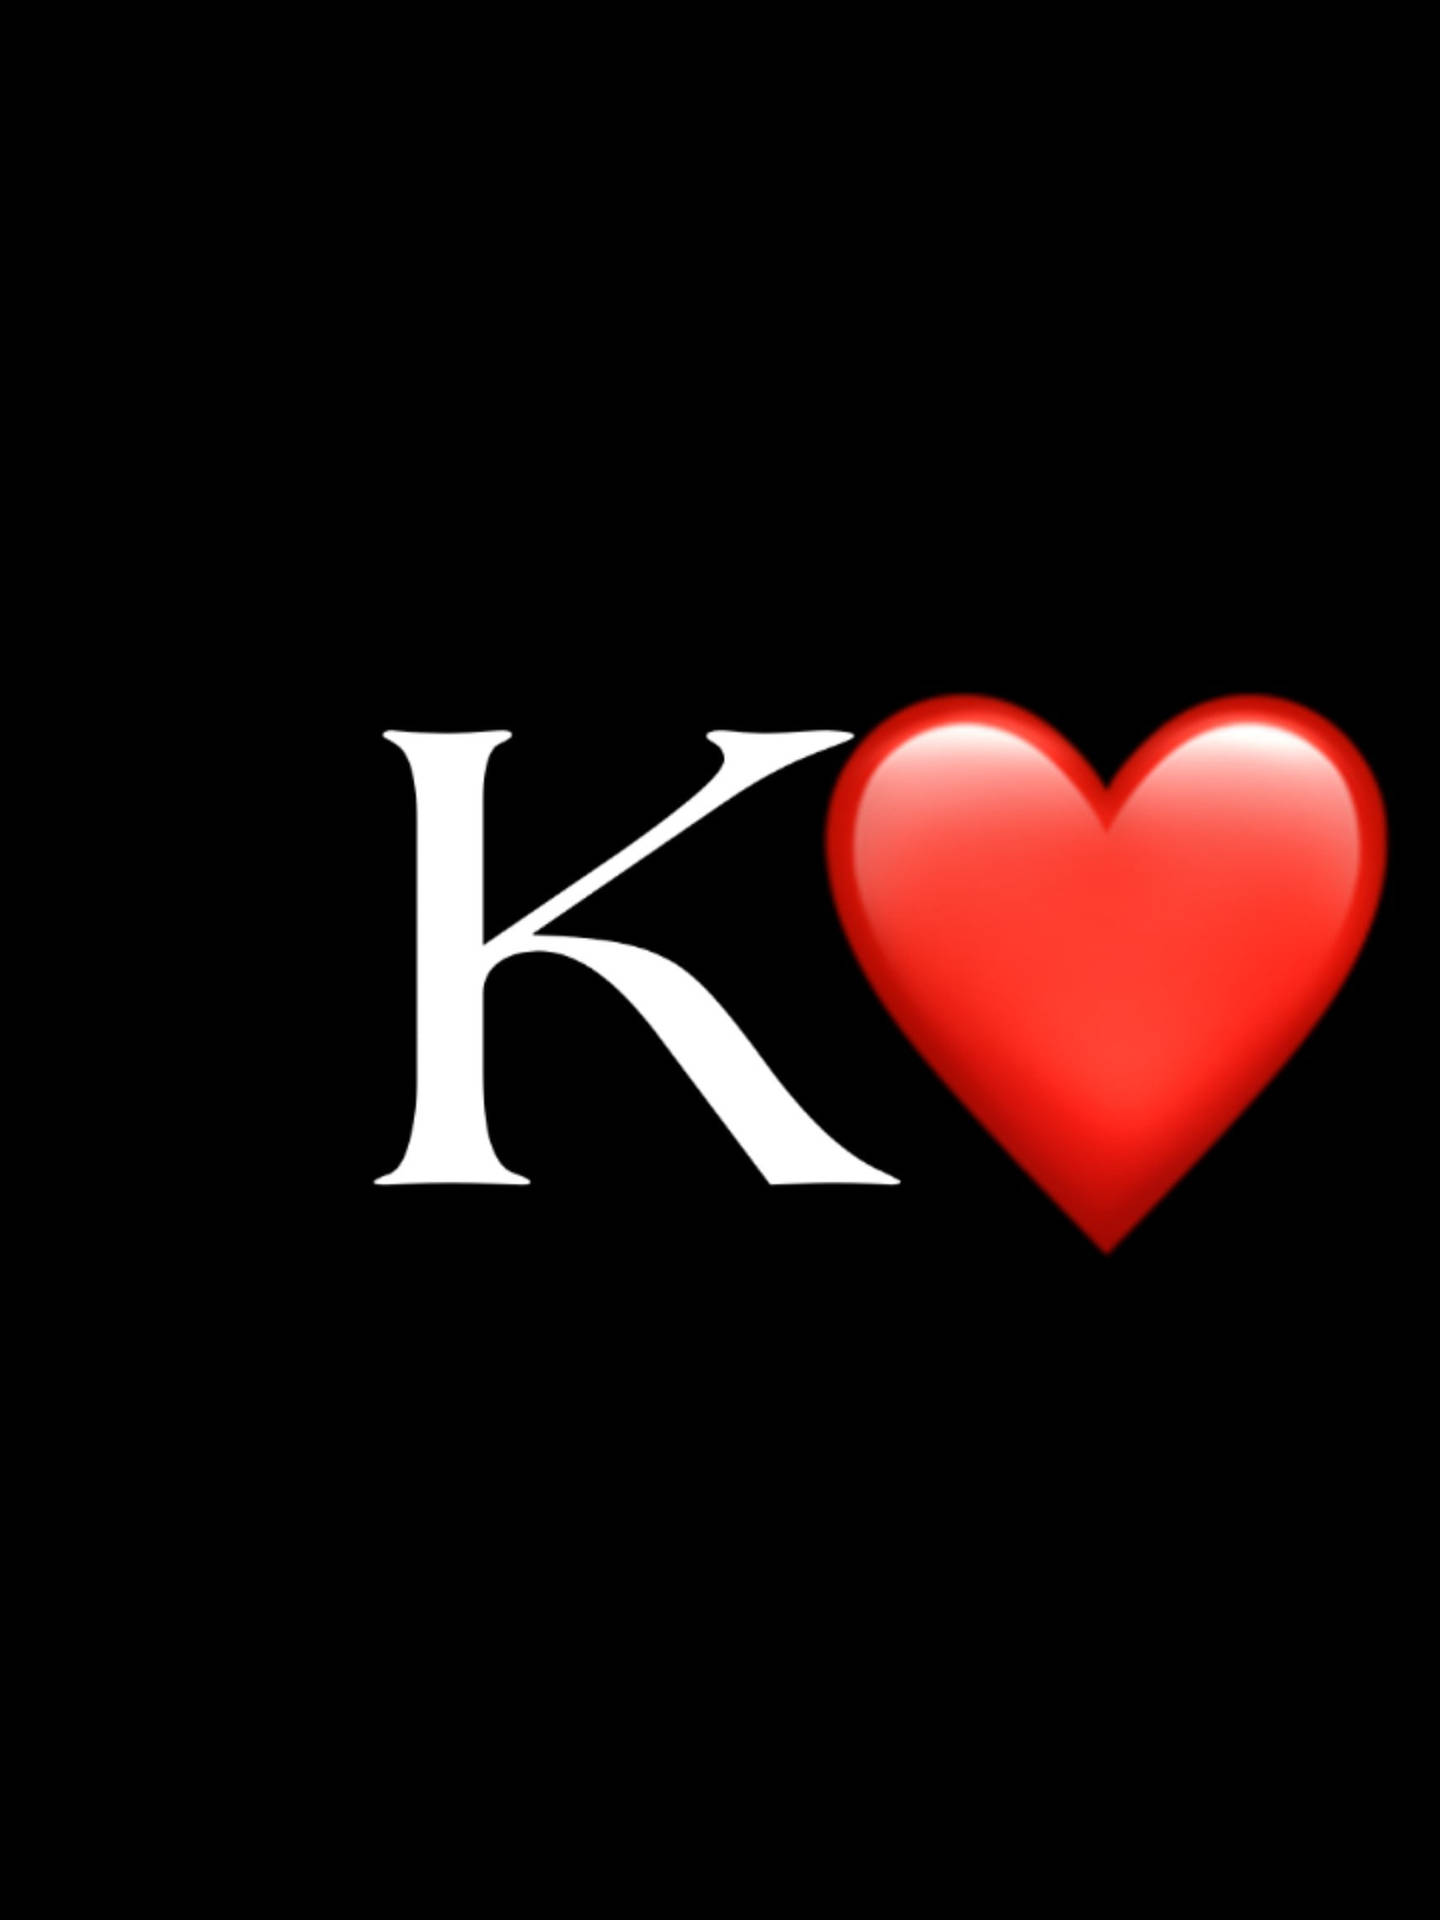 K Alphabet With Heart Background